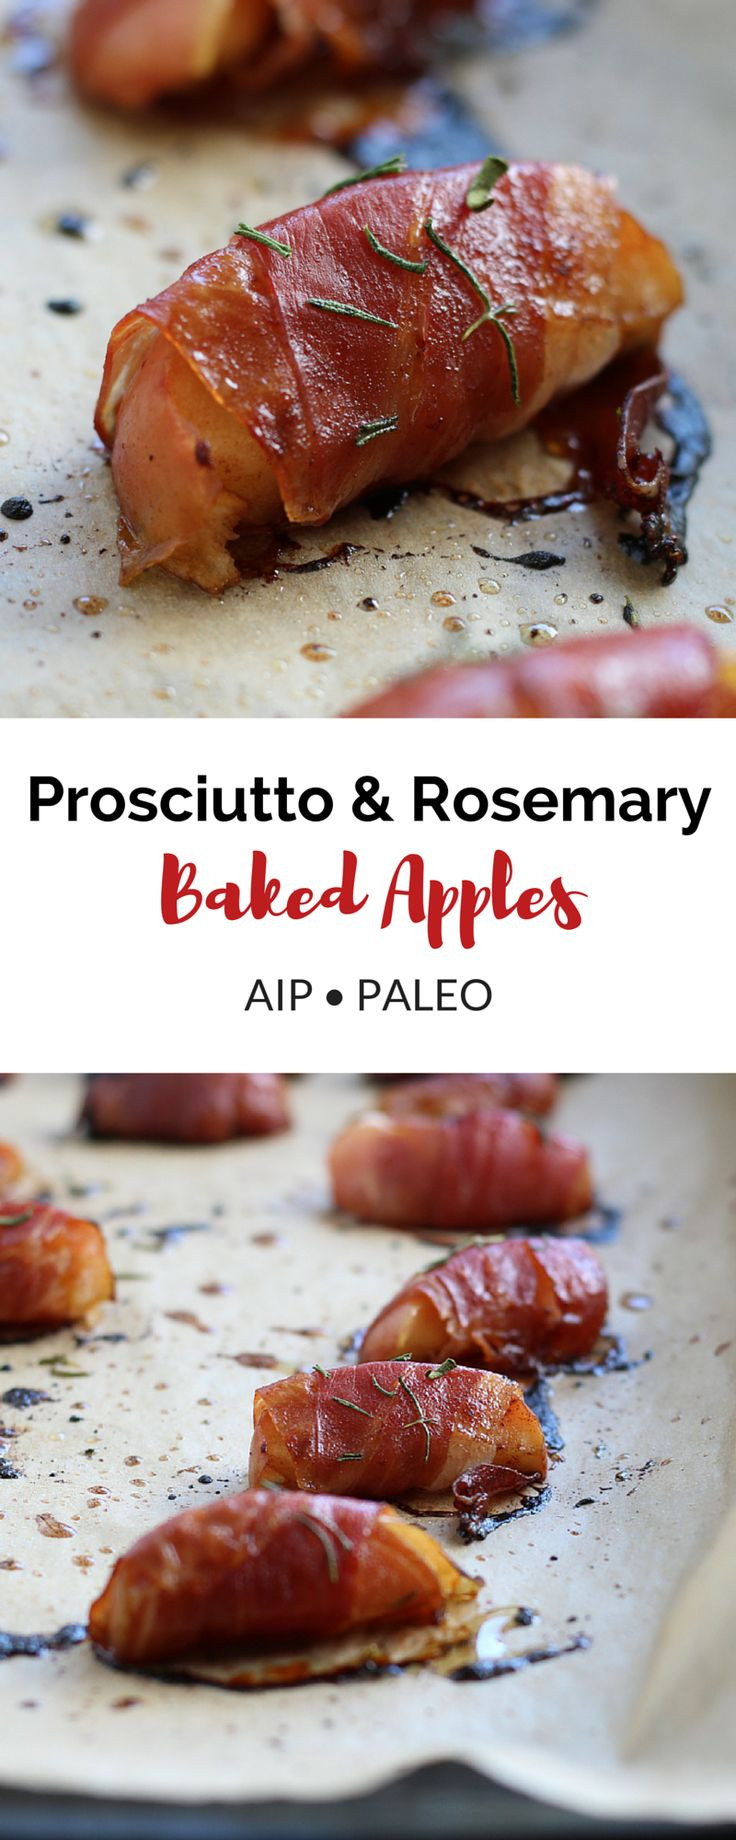 Paleo Thanksgiving Appetizers
 Best 25 Paleo apple recipes ideas on Pinterest